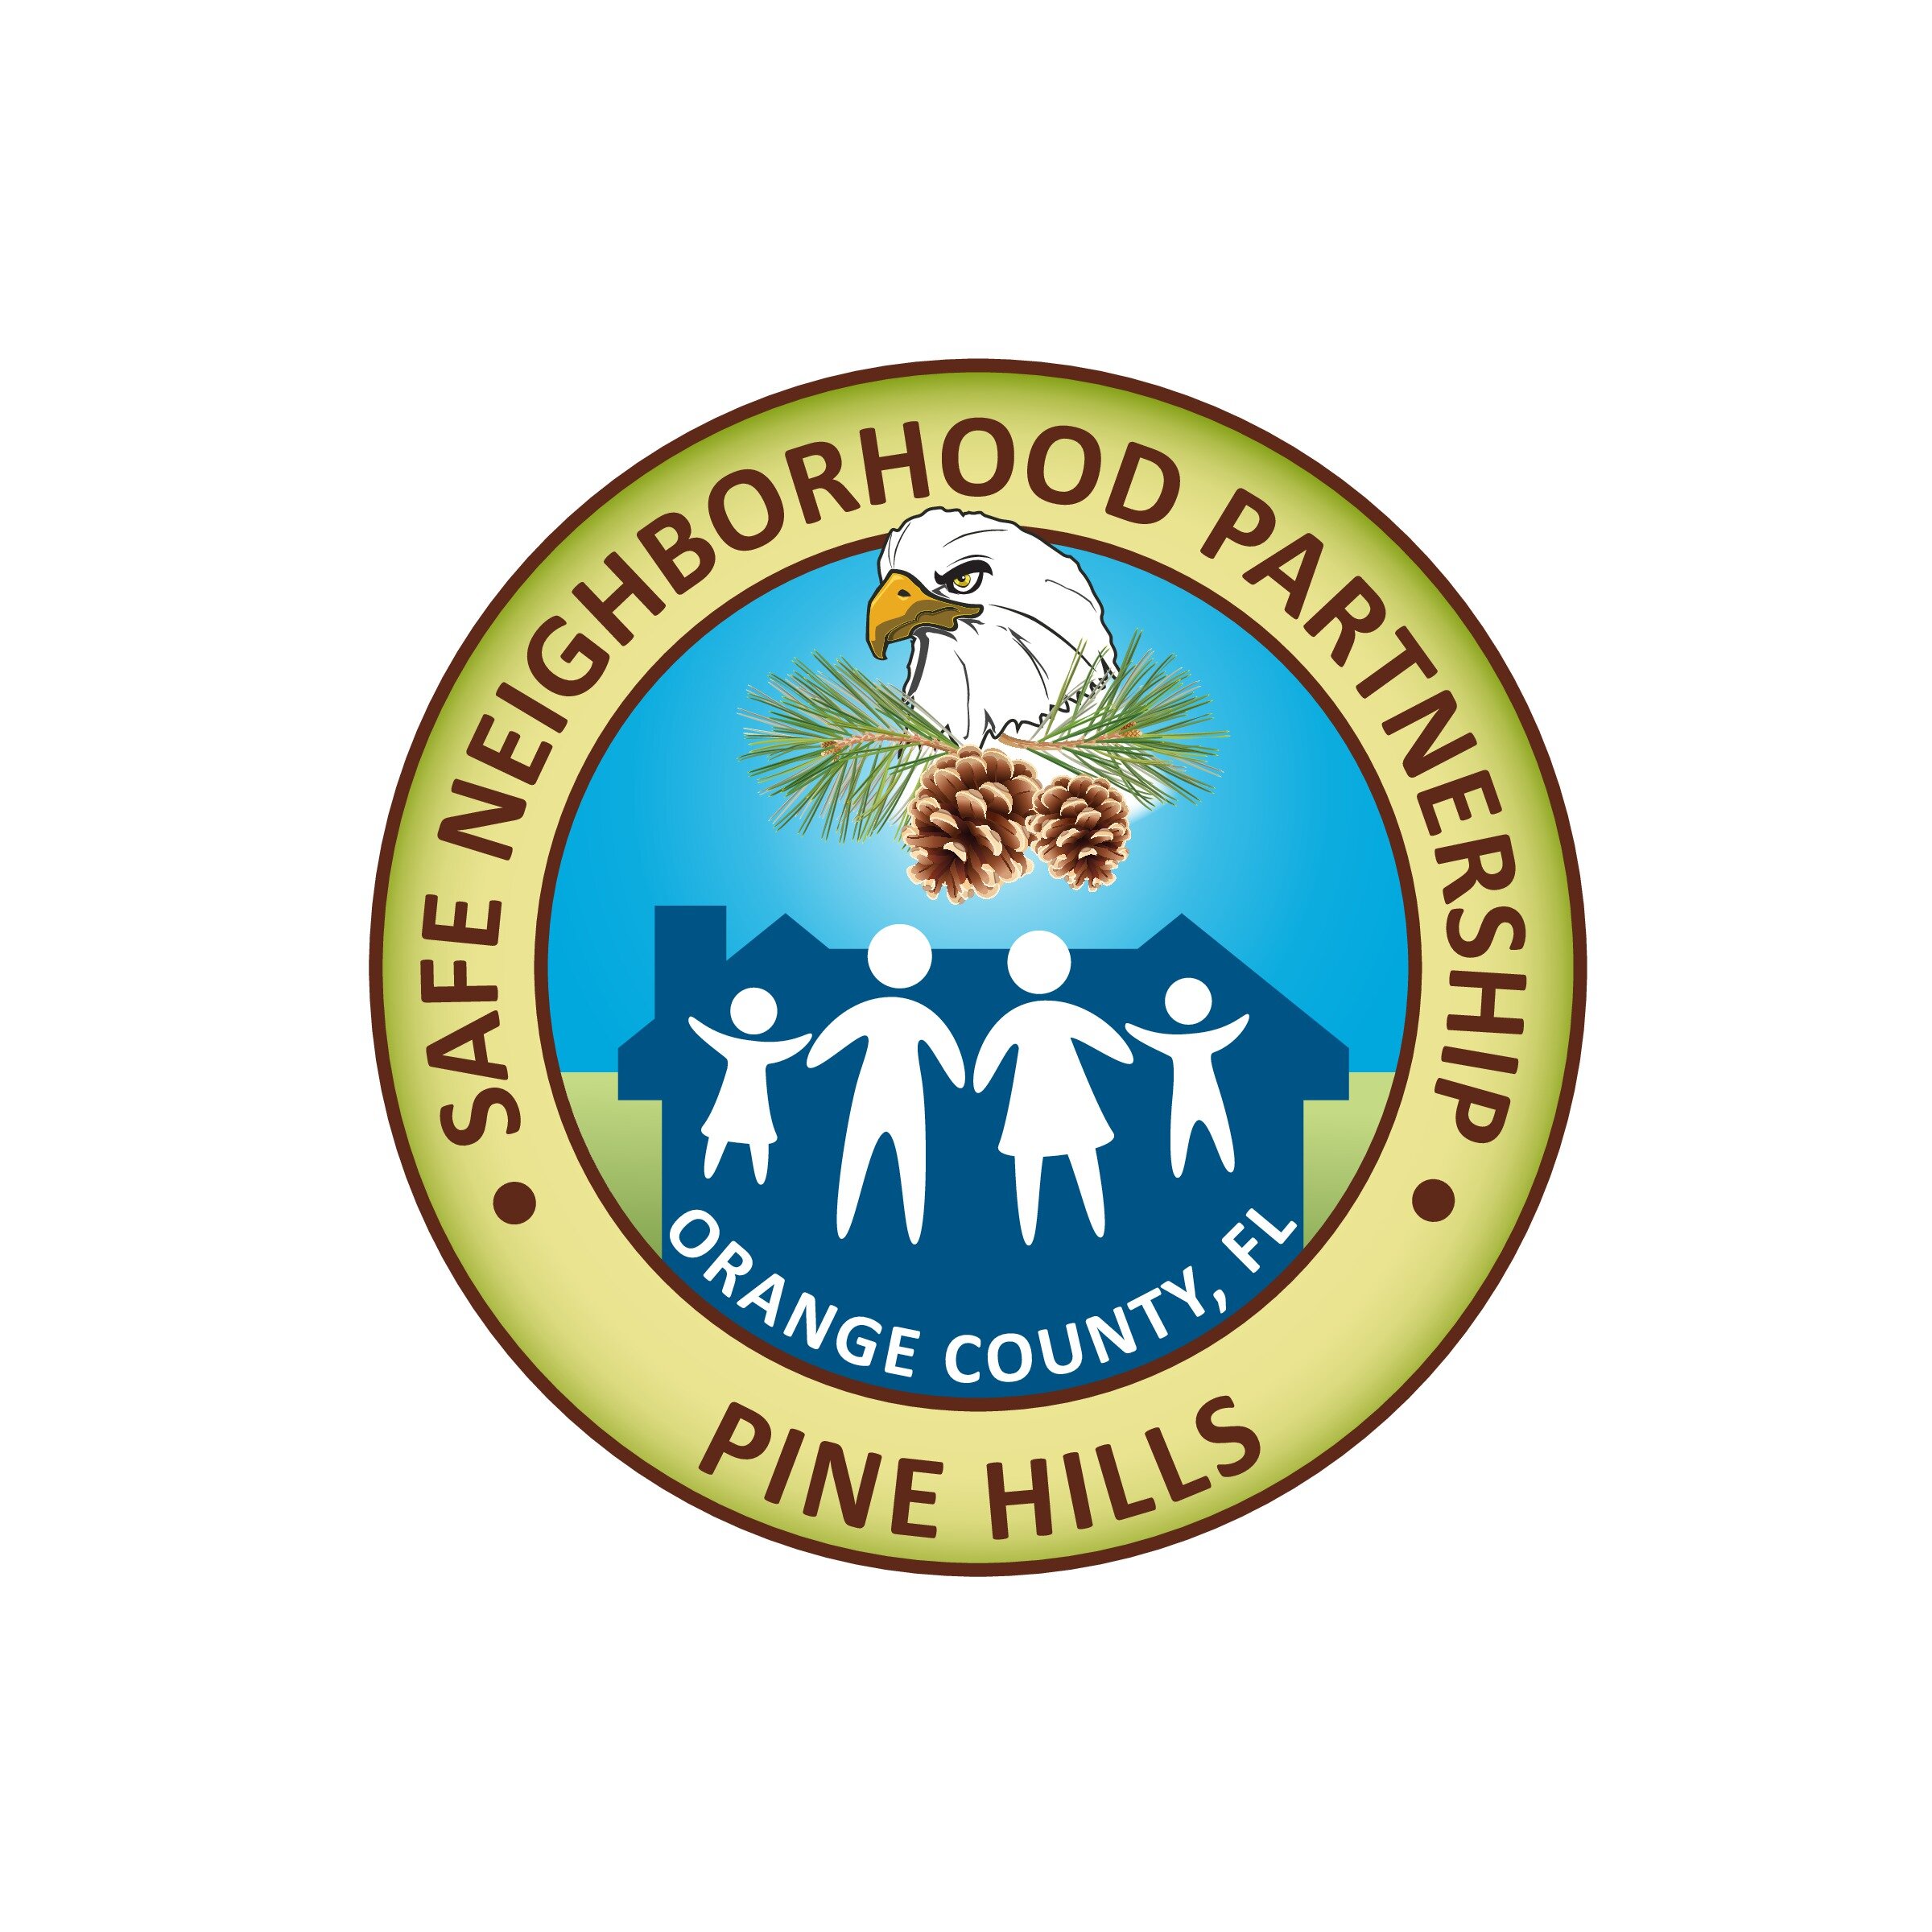 PineHills-SafeNeighborhood-page-0.jpg